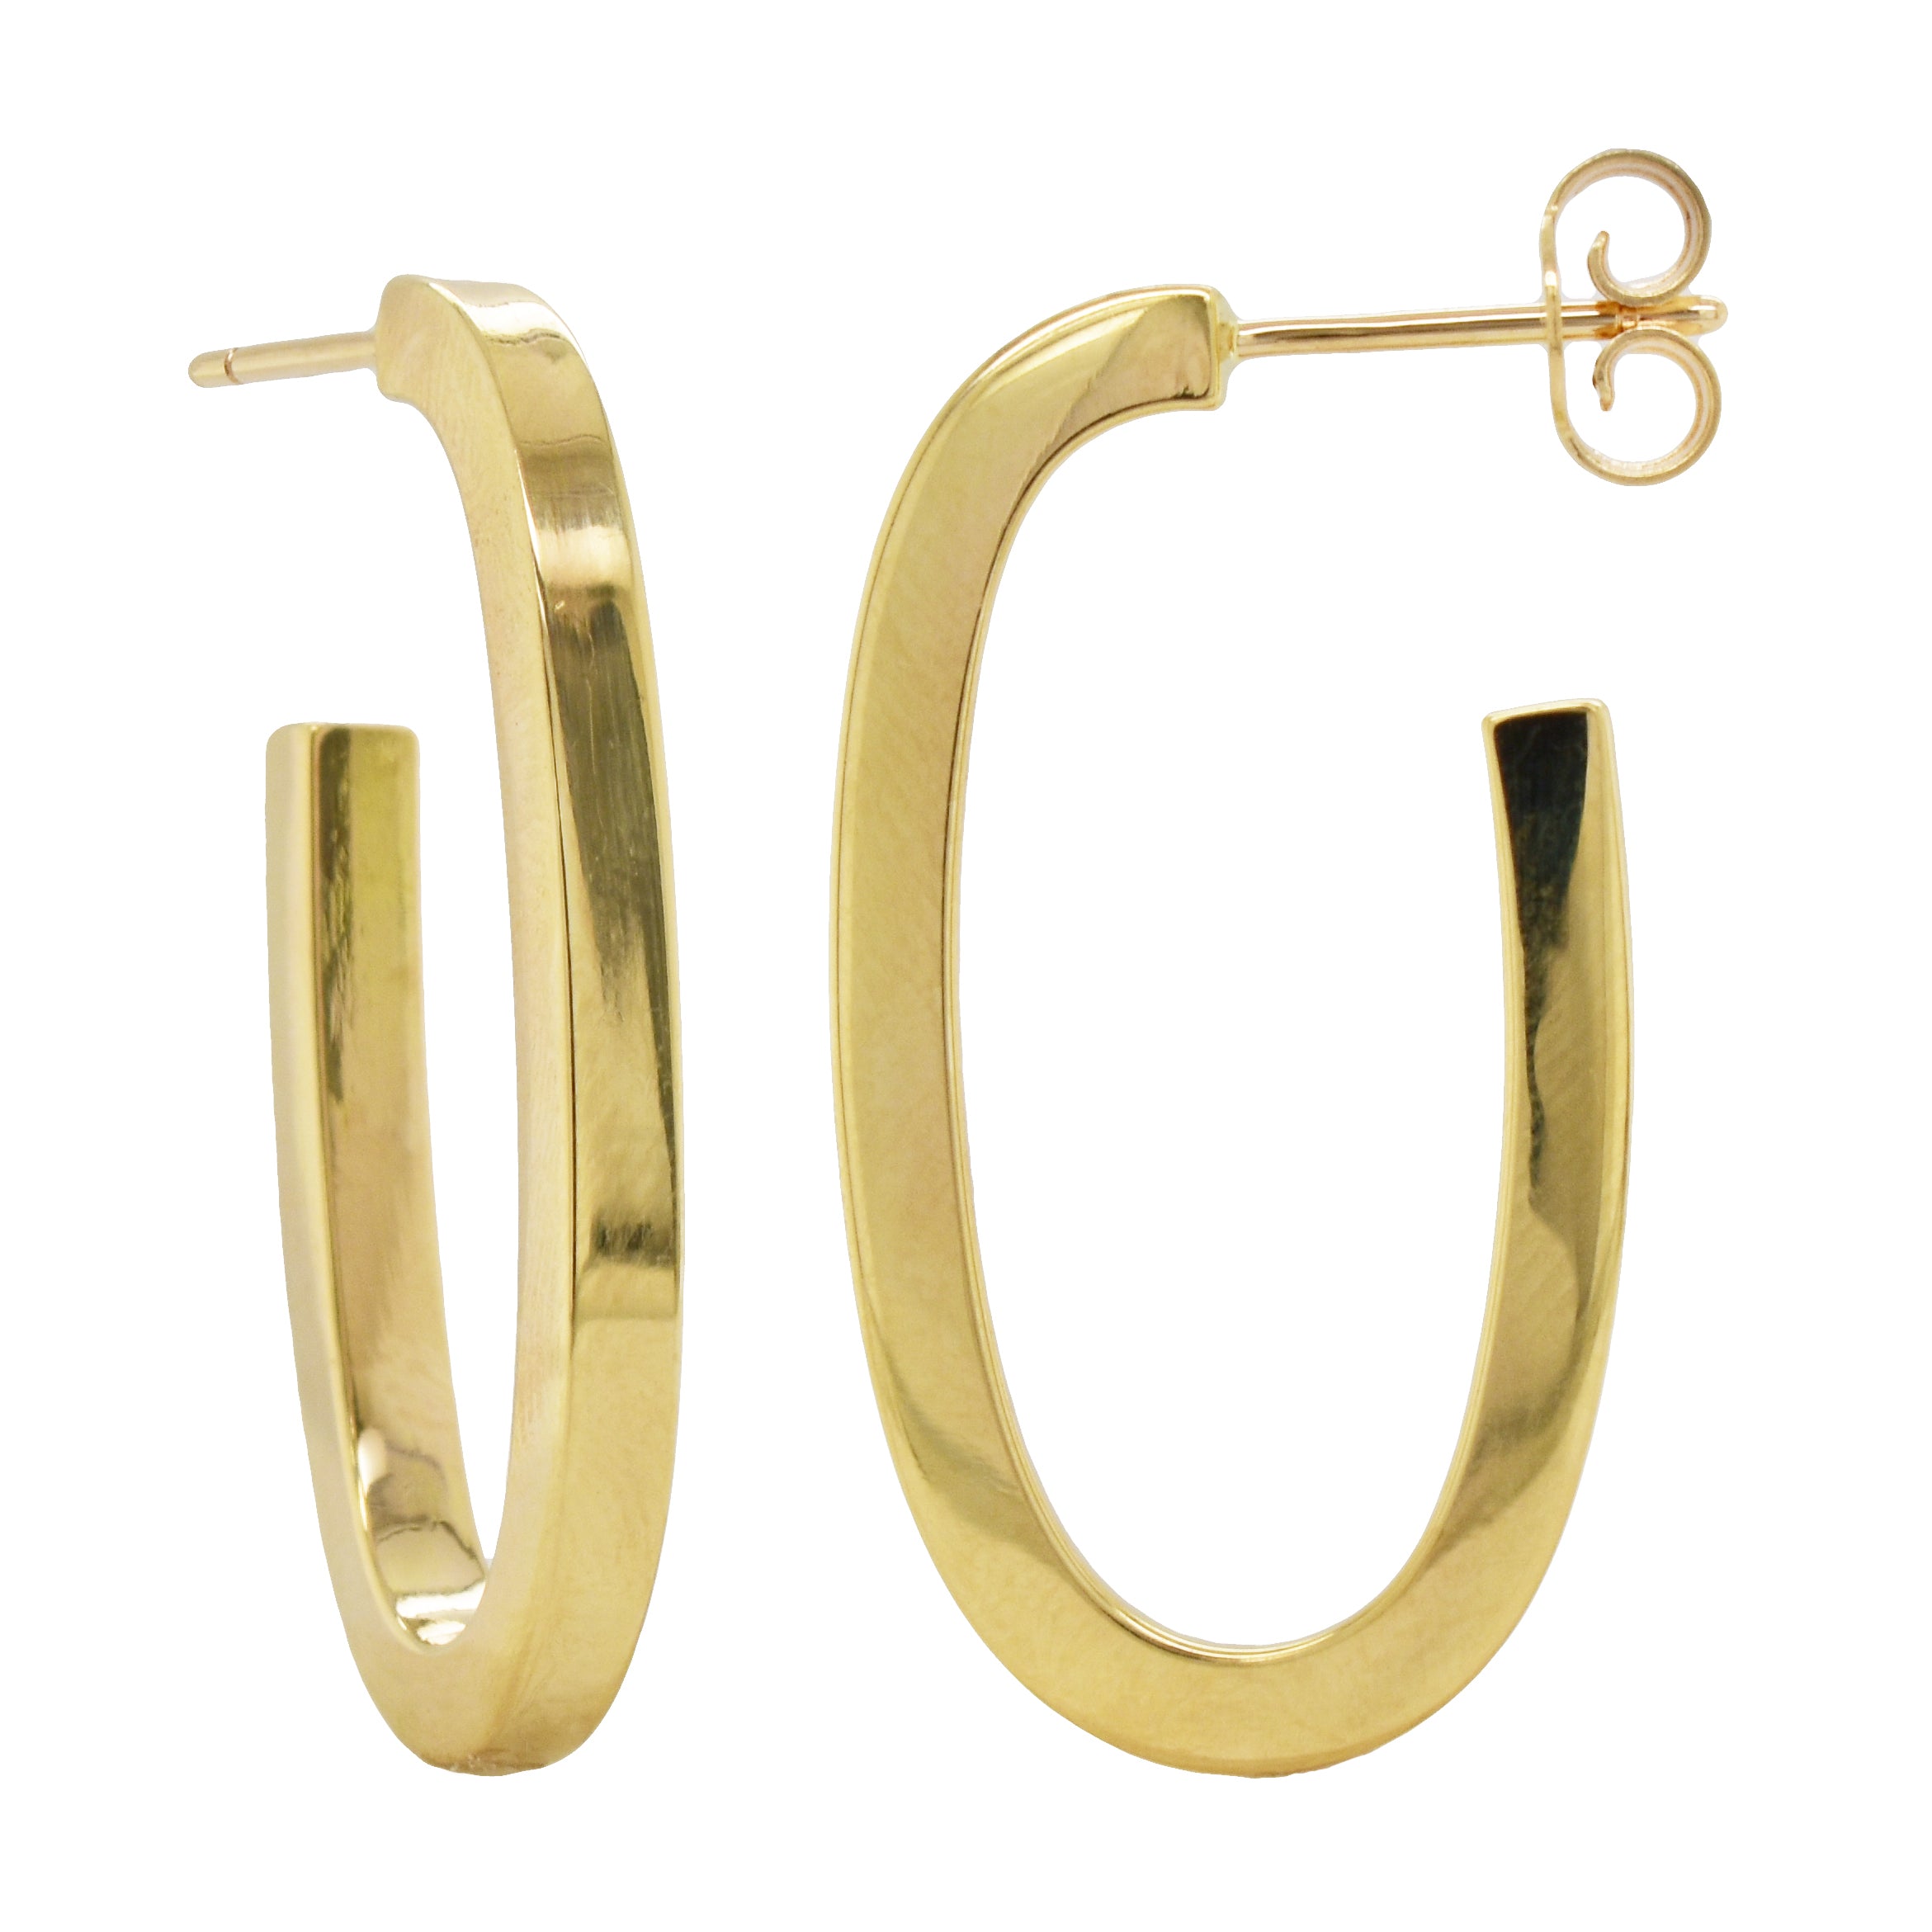 Buy 14K Gold 1 inch Diameter Classic Round Hoop Earrings for Women  Real  14K Yellow Gold 14K White Gold or 14K Rose Gold Hoop Earrings 14K White  Gold notapplicable at Amazonin